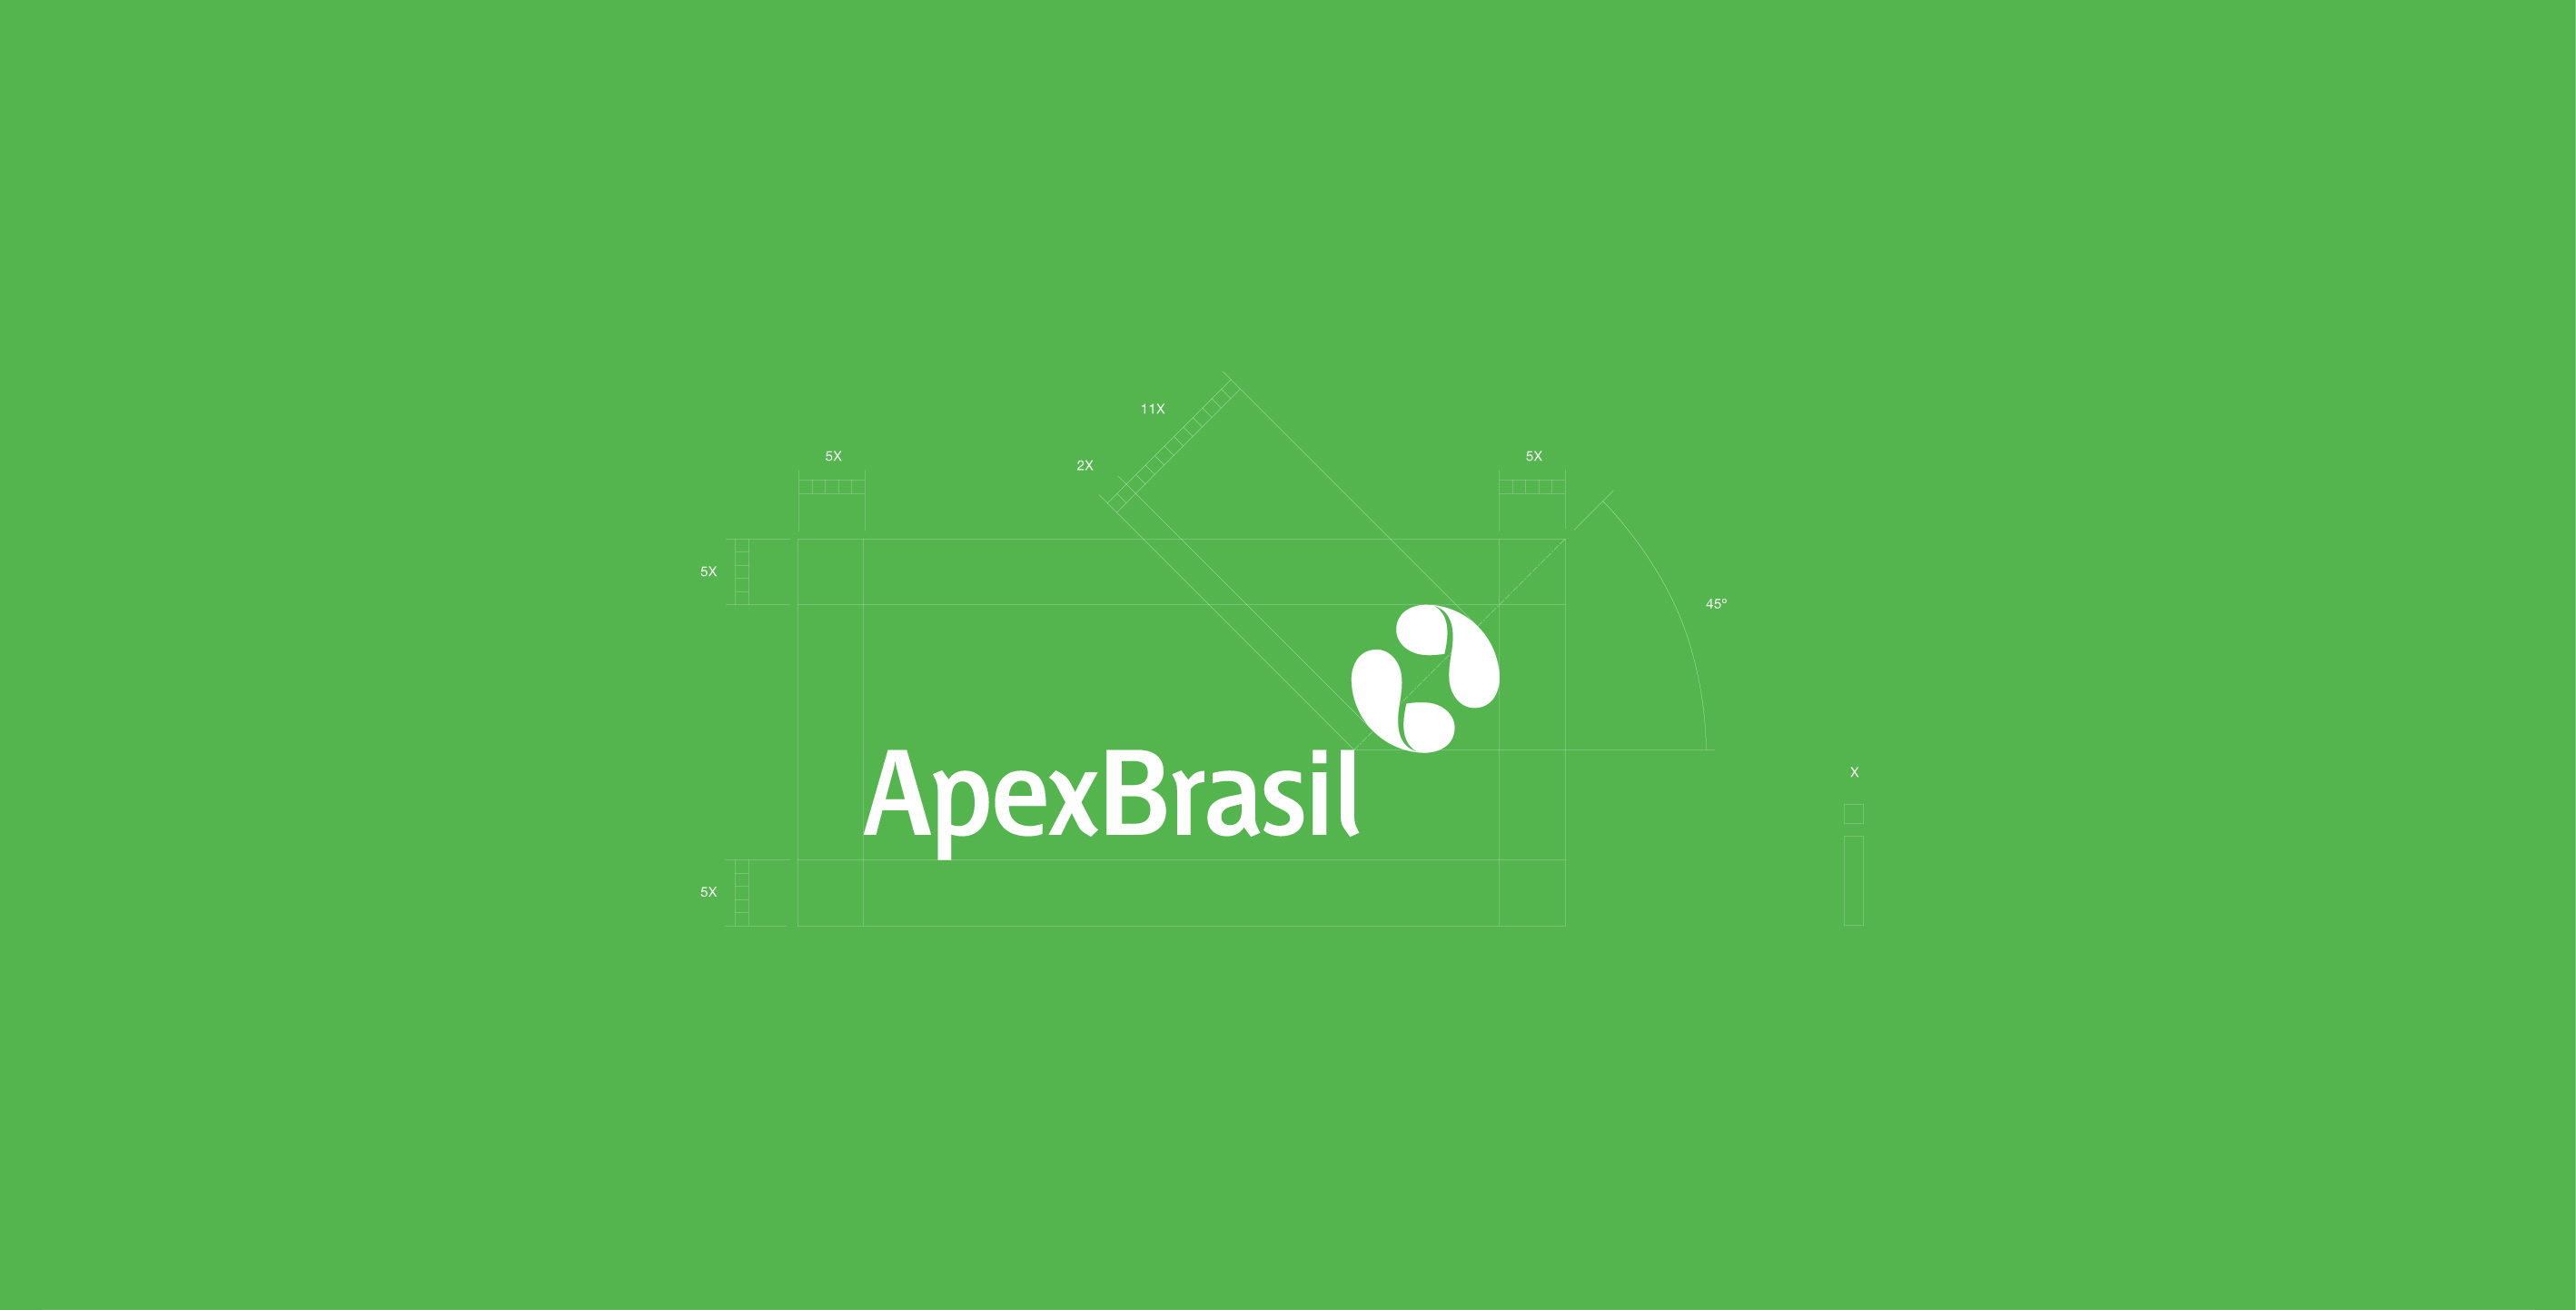 Apex-Brasil: Brand Identity